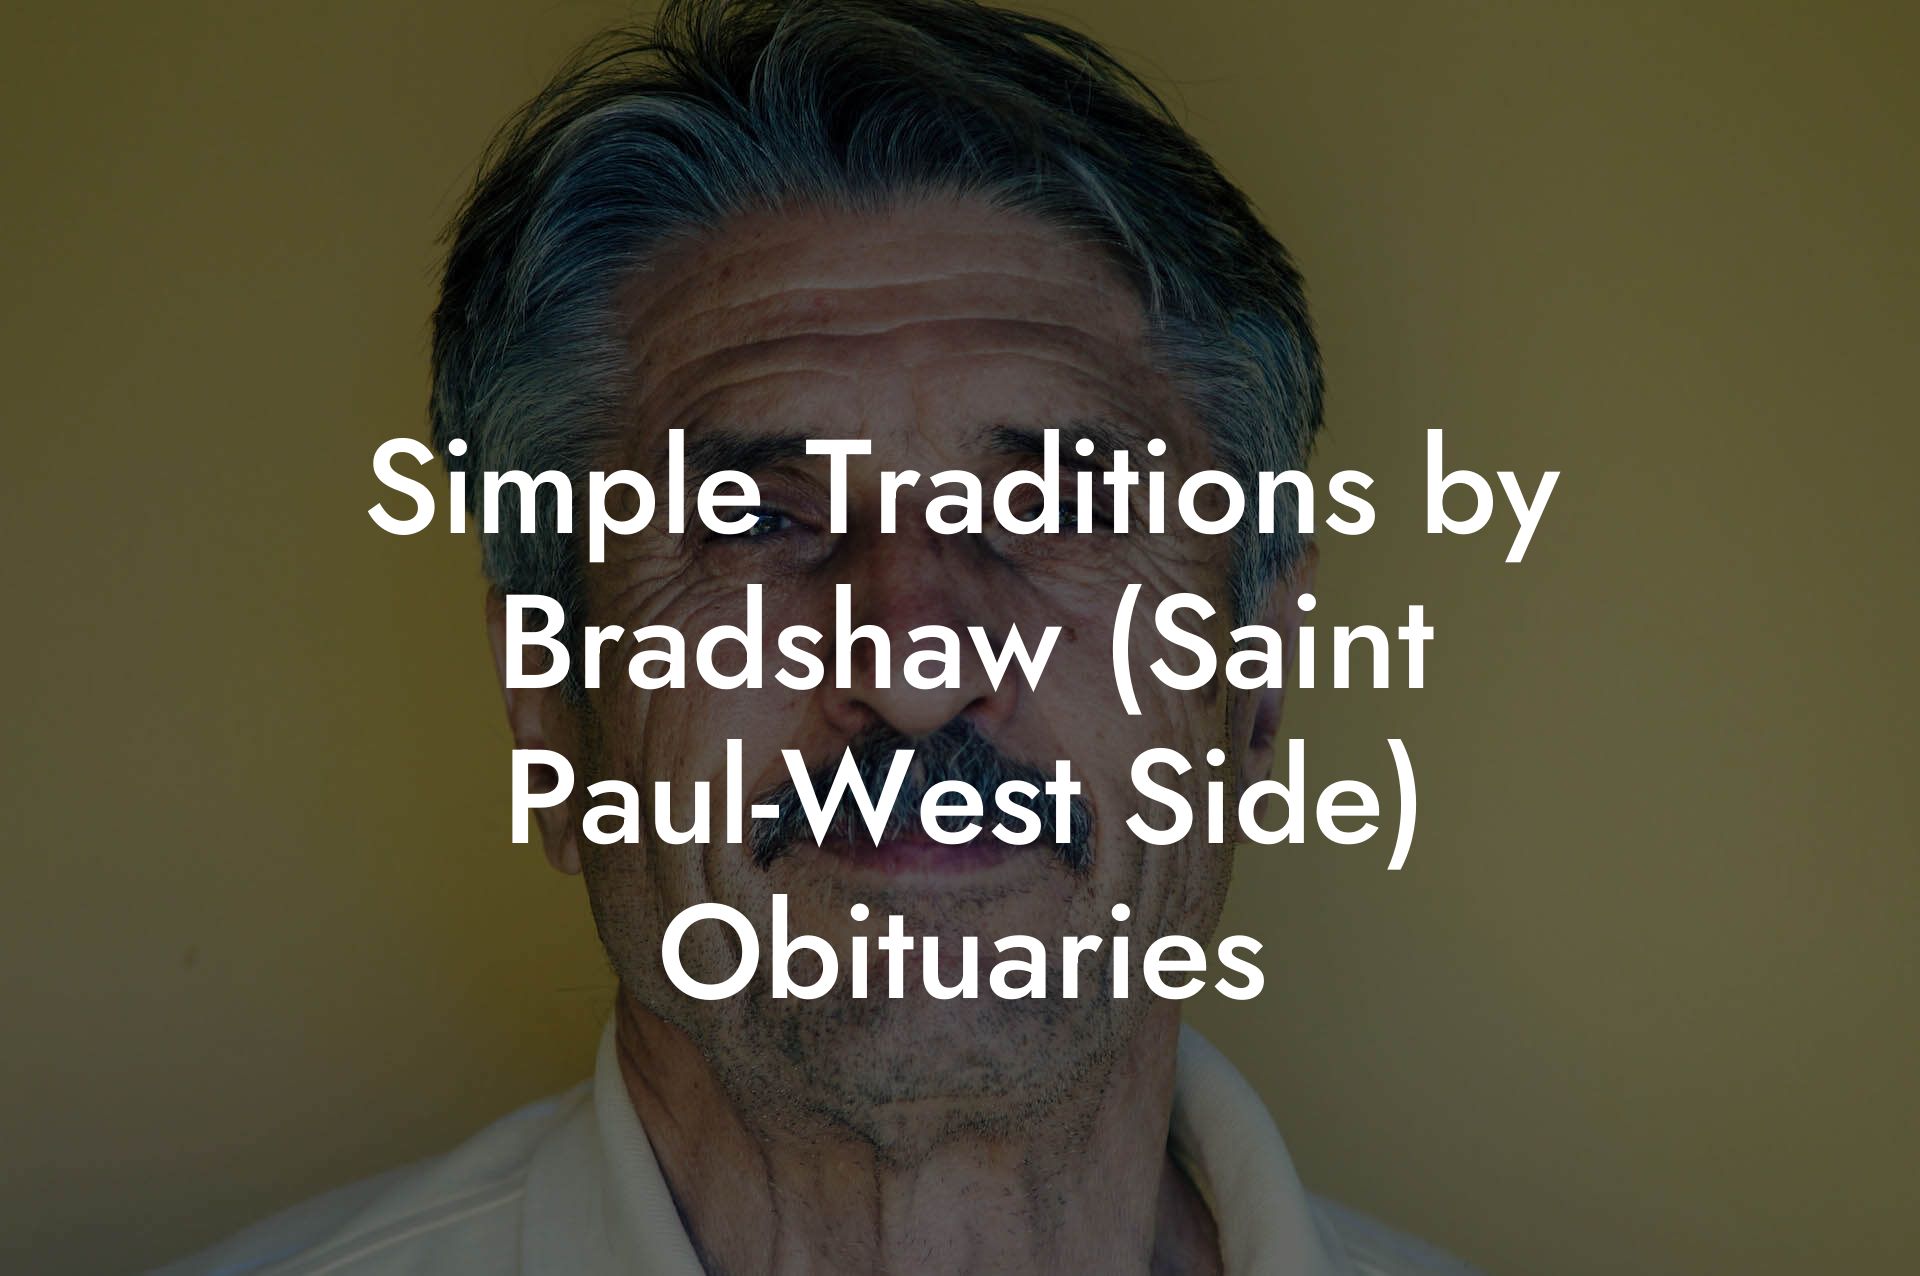 Simple Traditions by Bradshaw (Saint Paul-West Side) Obituaries